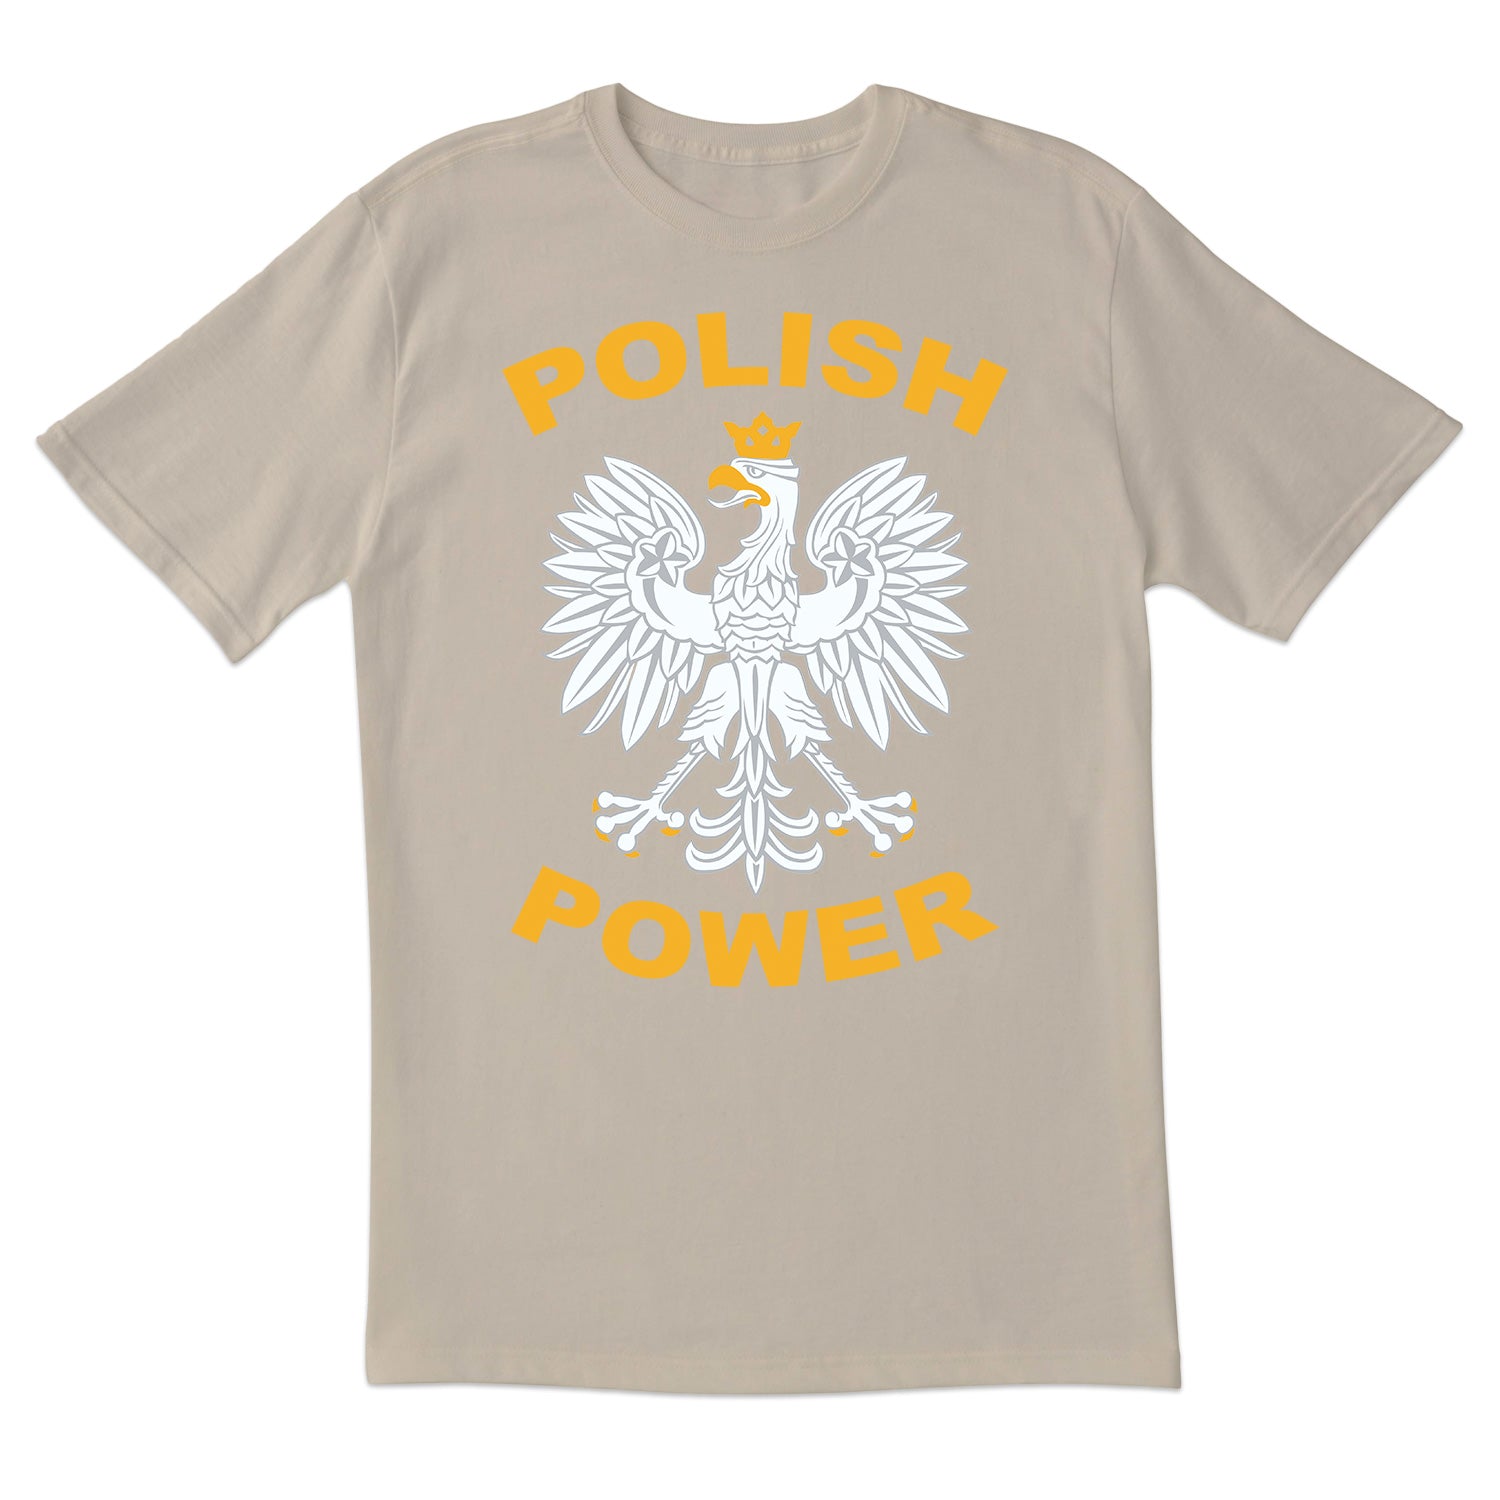 White Eagle Polish Power Short Sleeve Tshirt